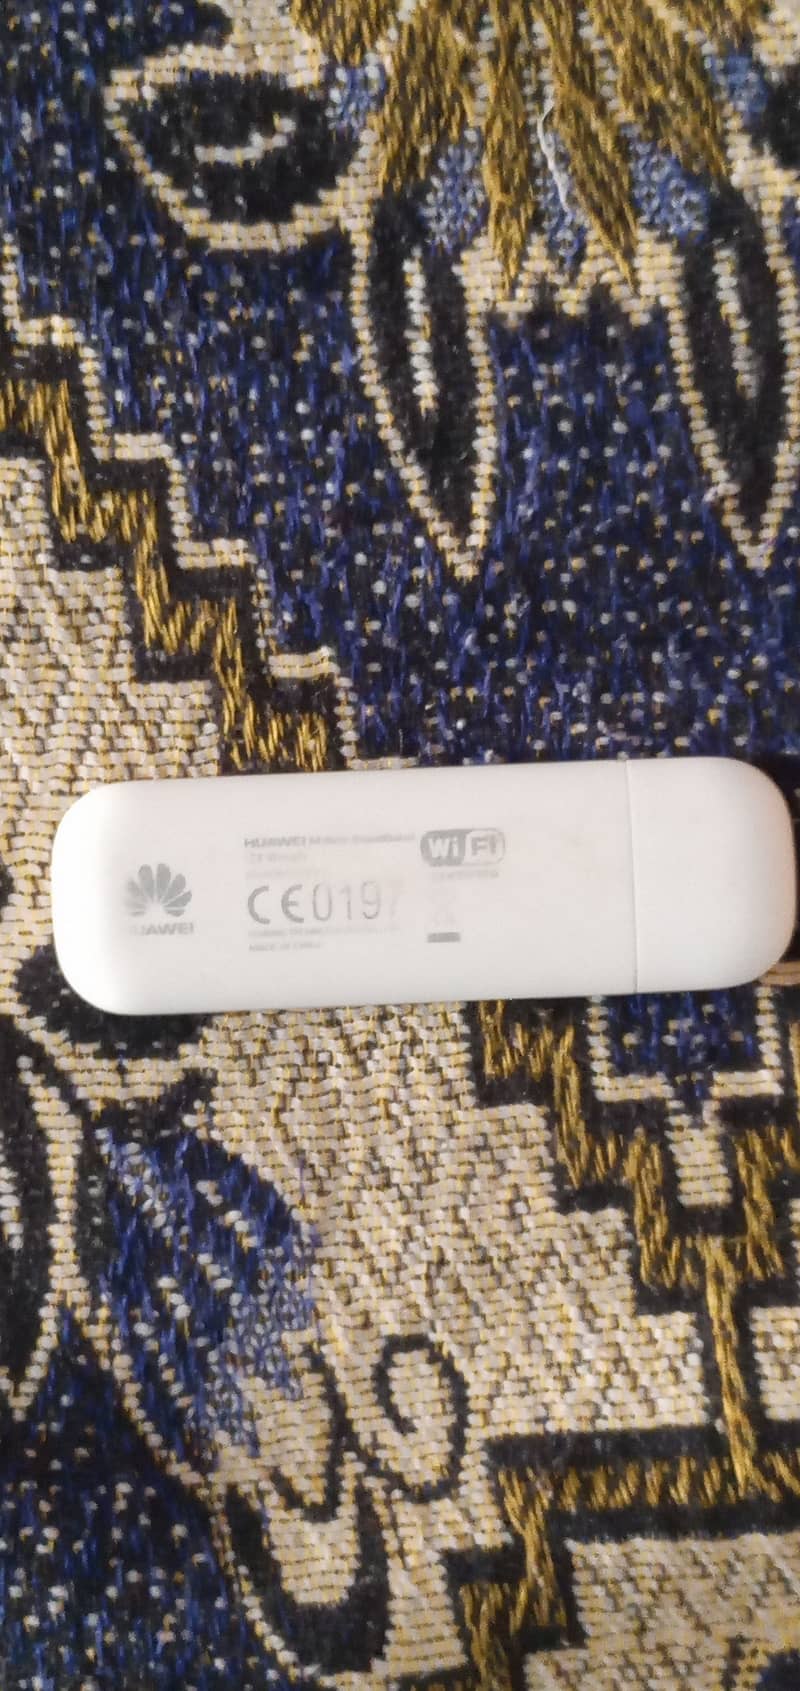 Telenor 4G Wingle Huawei E8372 Unlocked for all sims 2